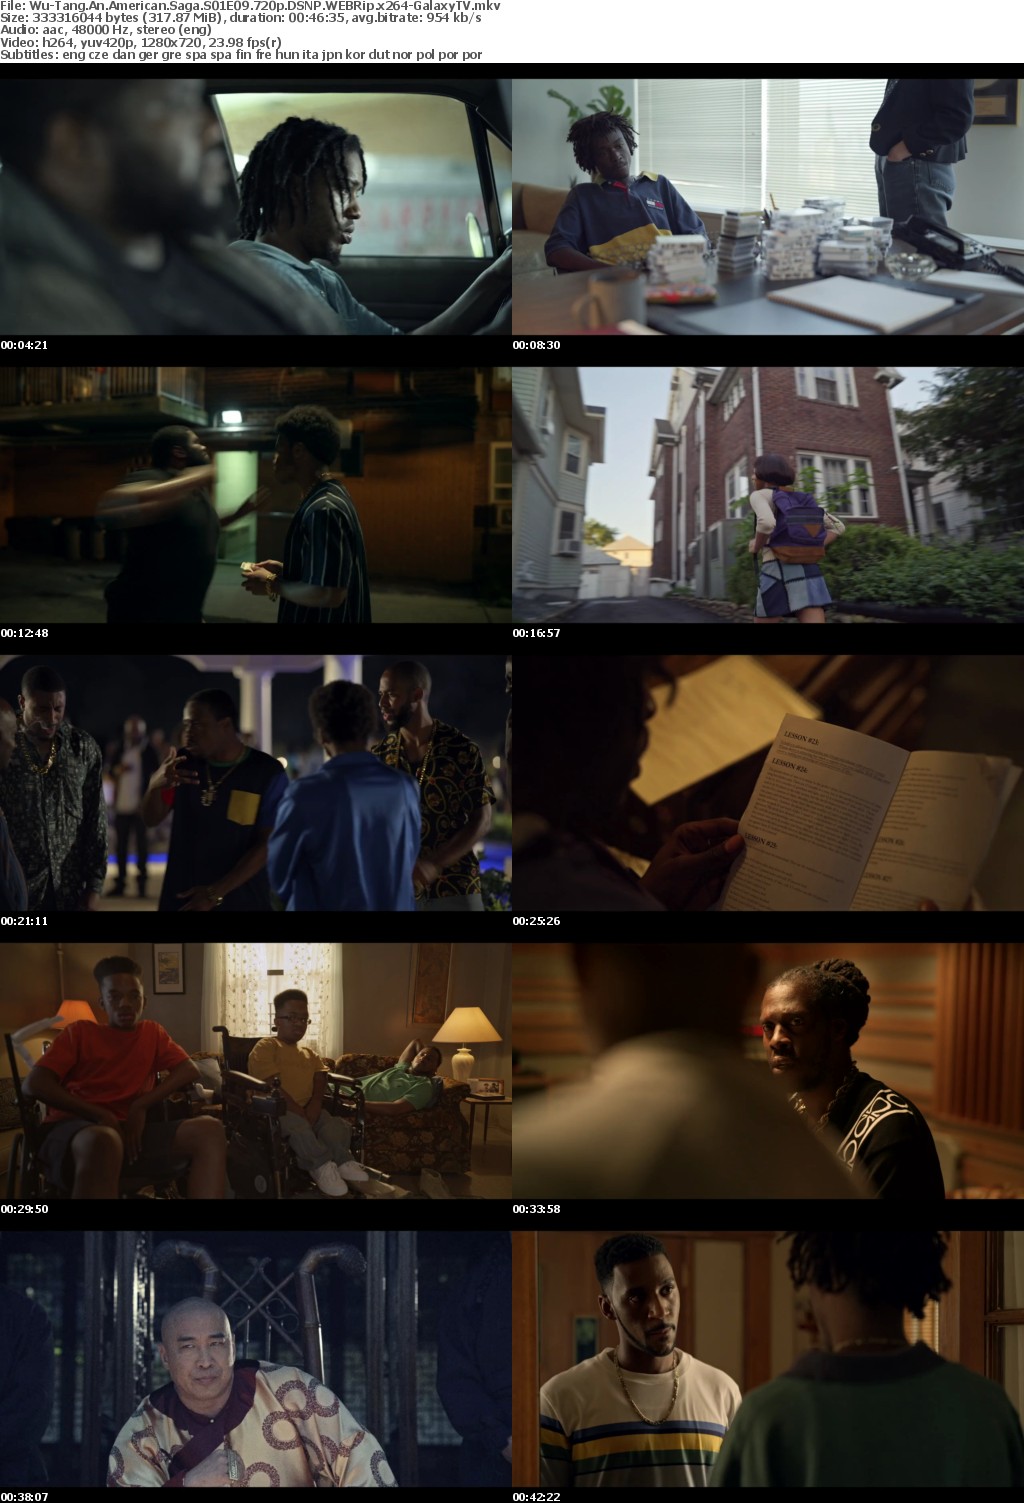 Wu-Tang An American Saga S01 COMPLETE 720p DSNP WEBRip x264-GalaxyTV